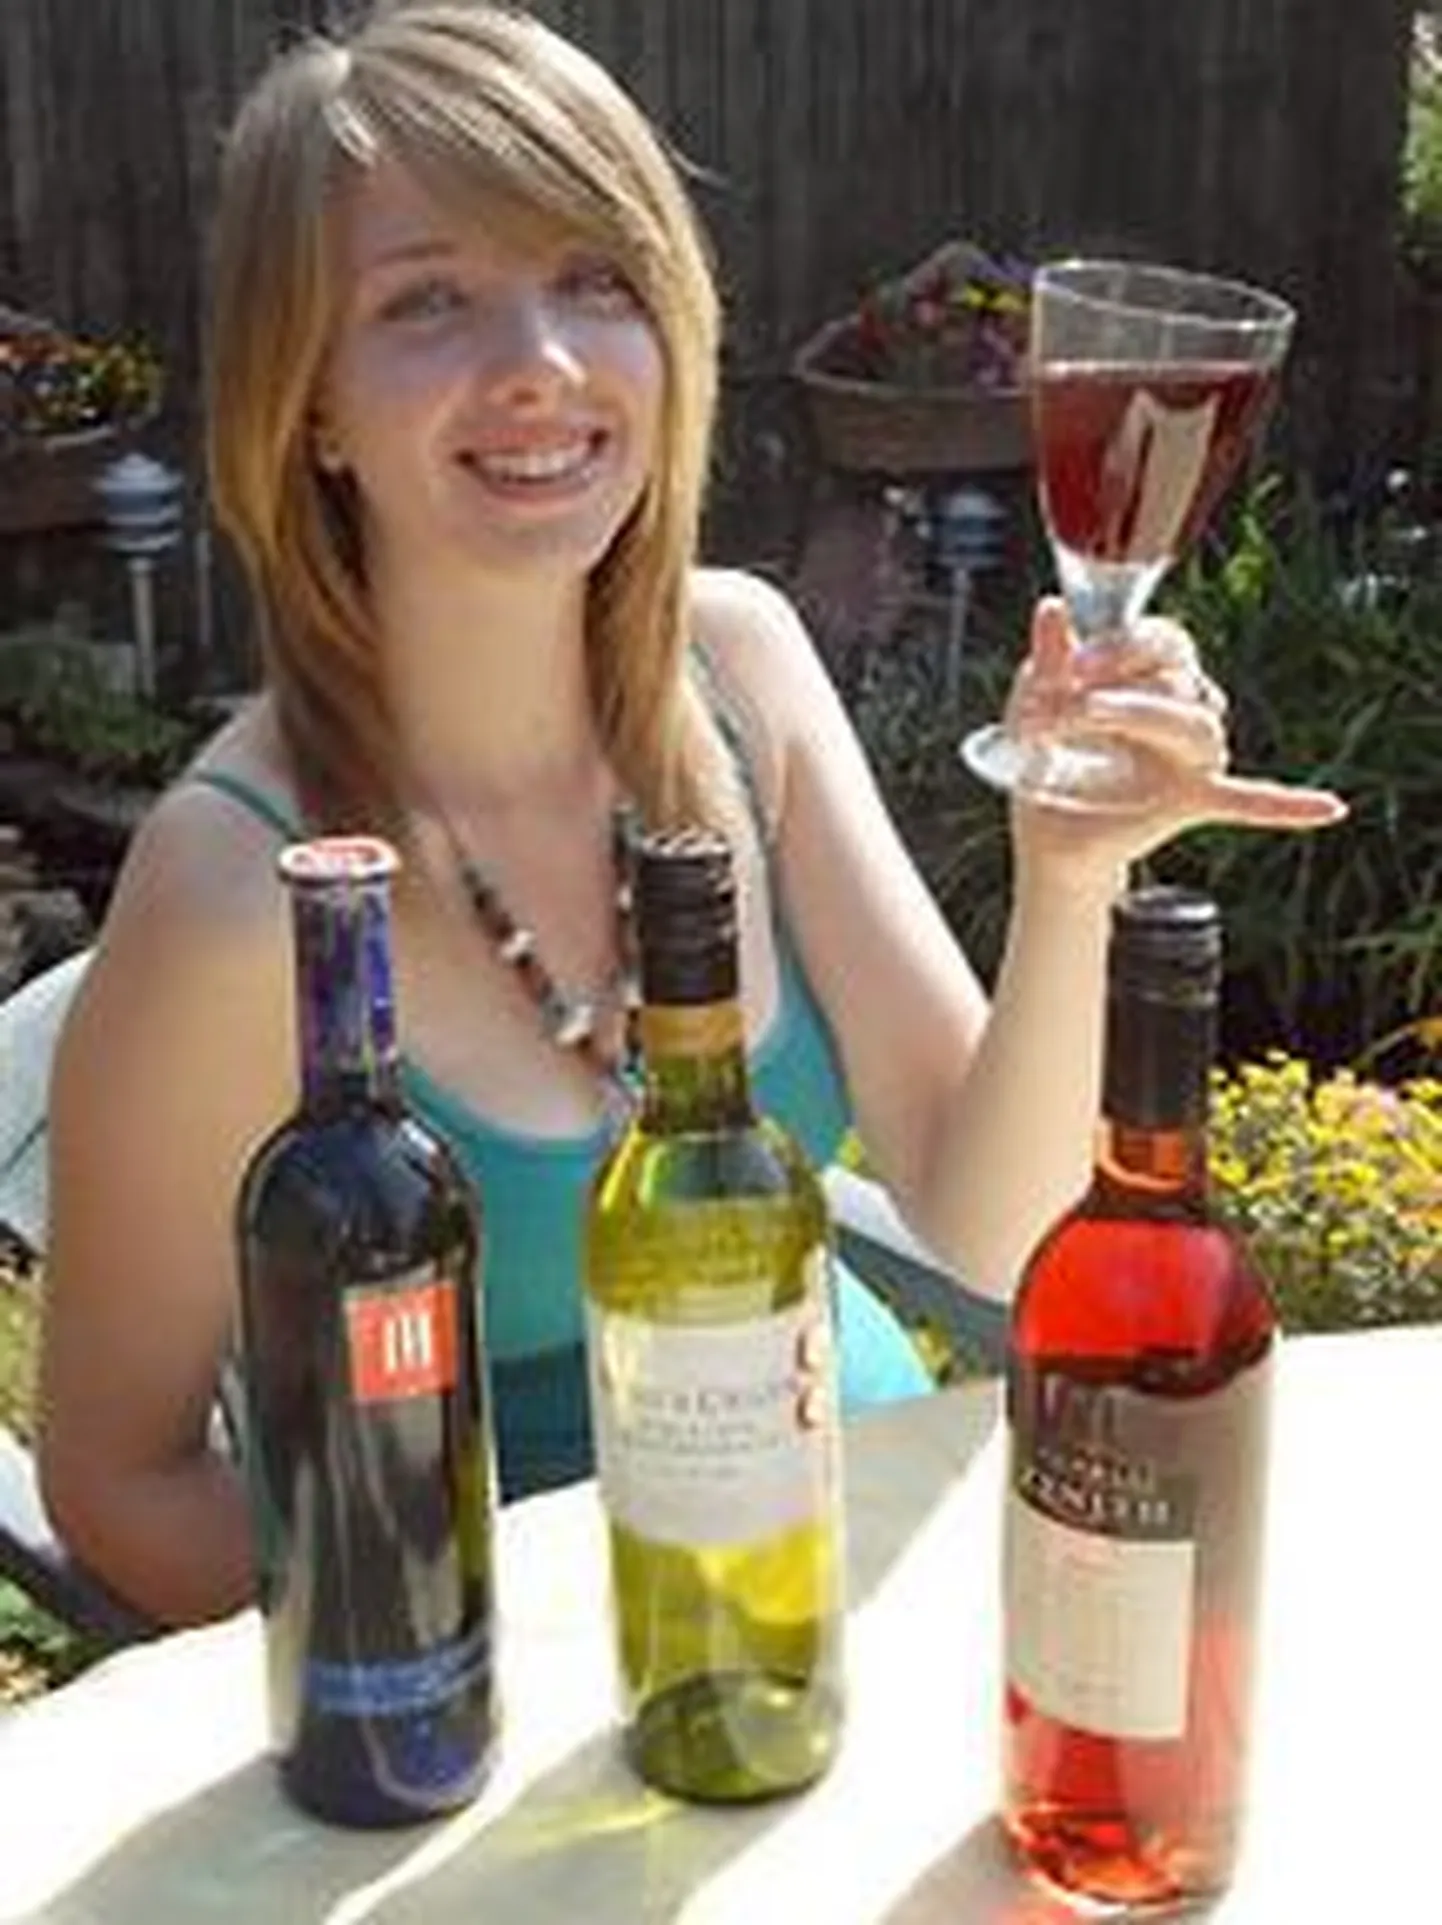 Briti üliõpilasel Leah Milleril on veiniallergia